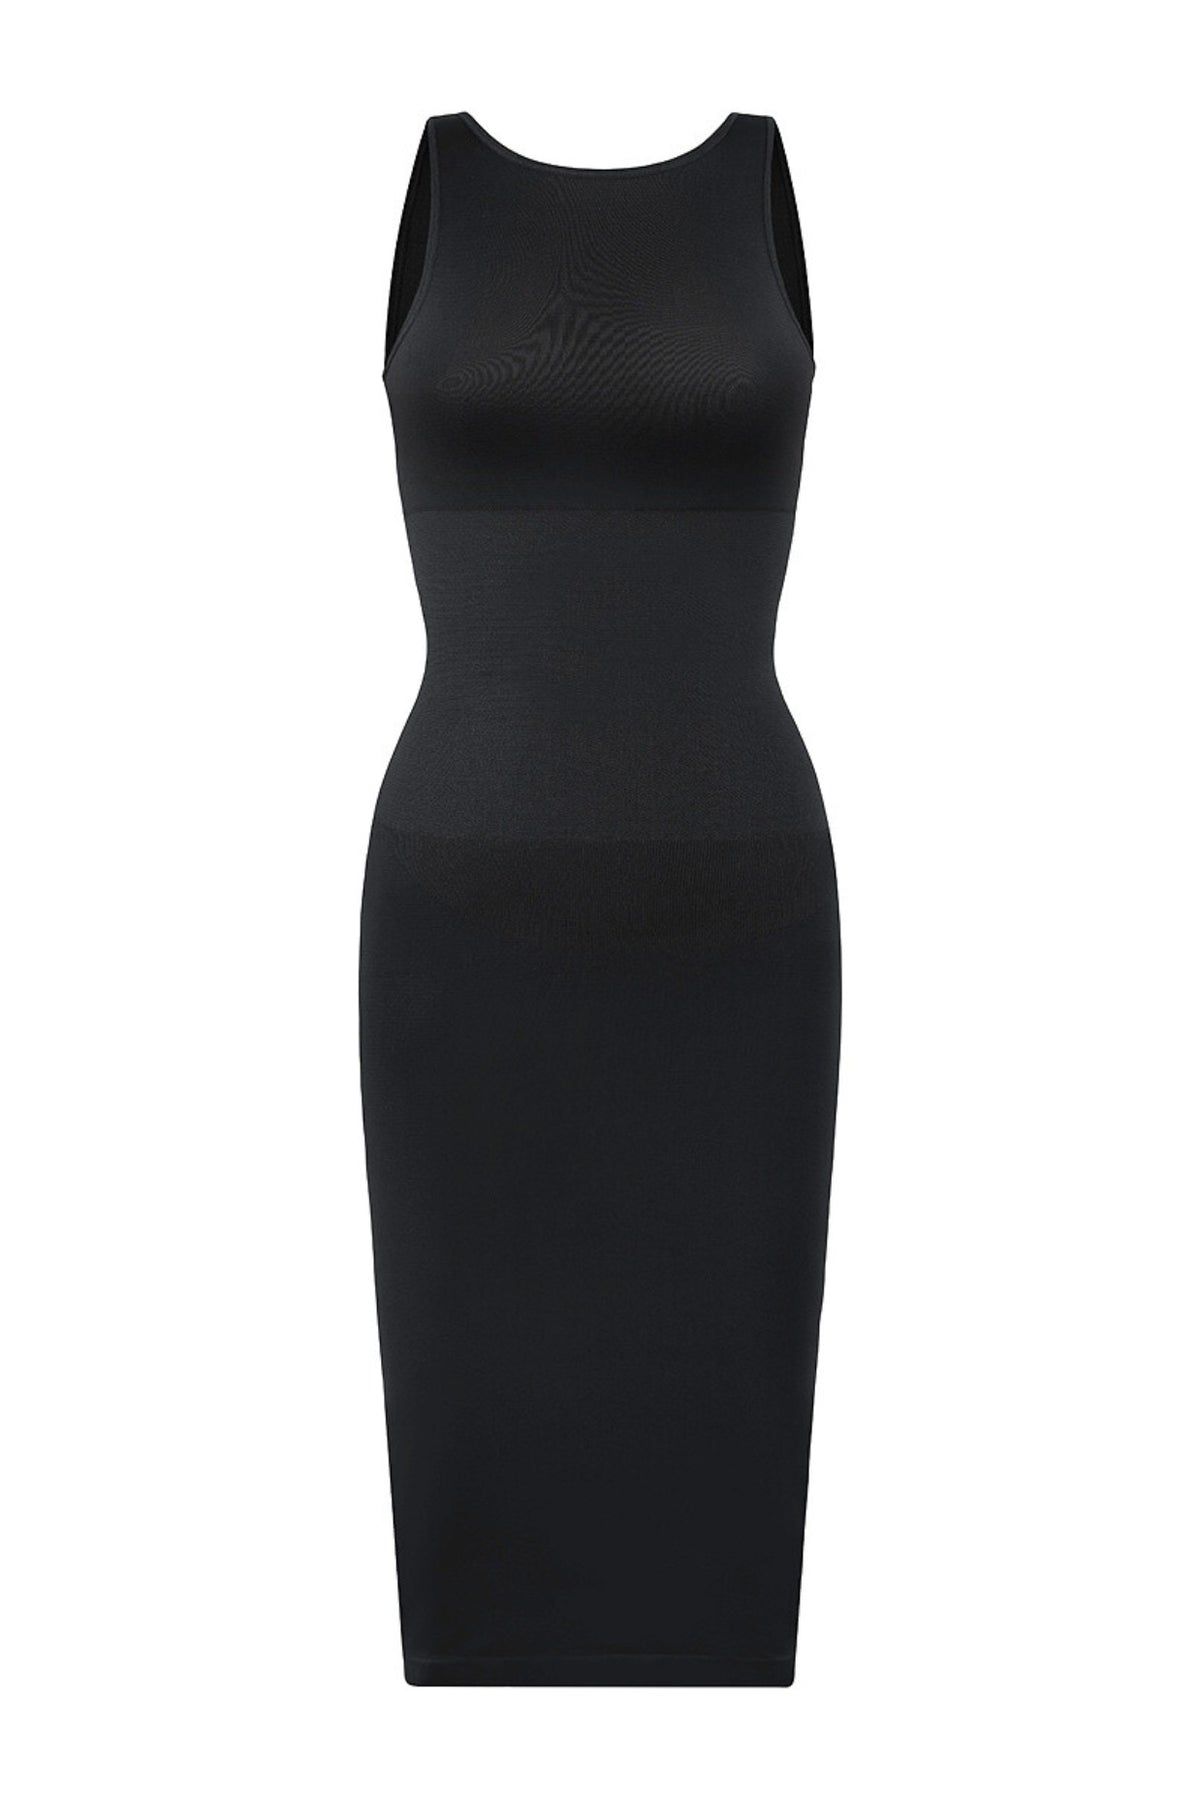 Reign Shaping Dress - Black Eco Contour Clothing